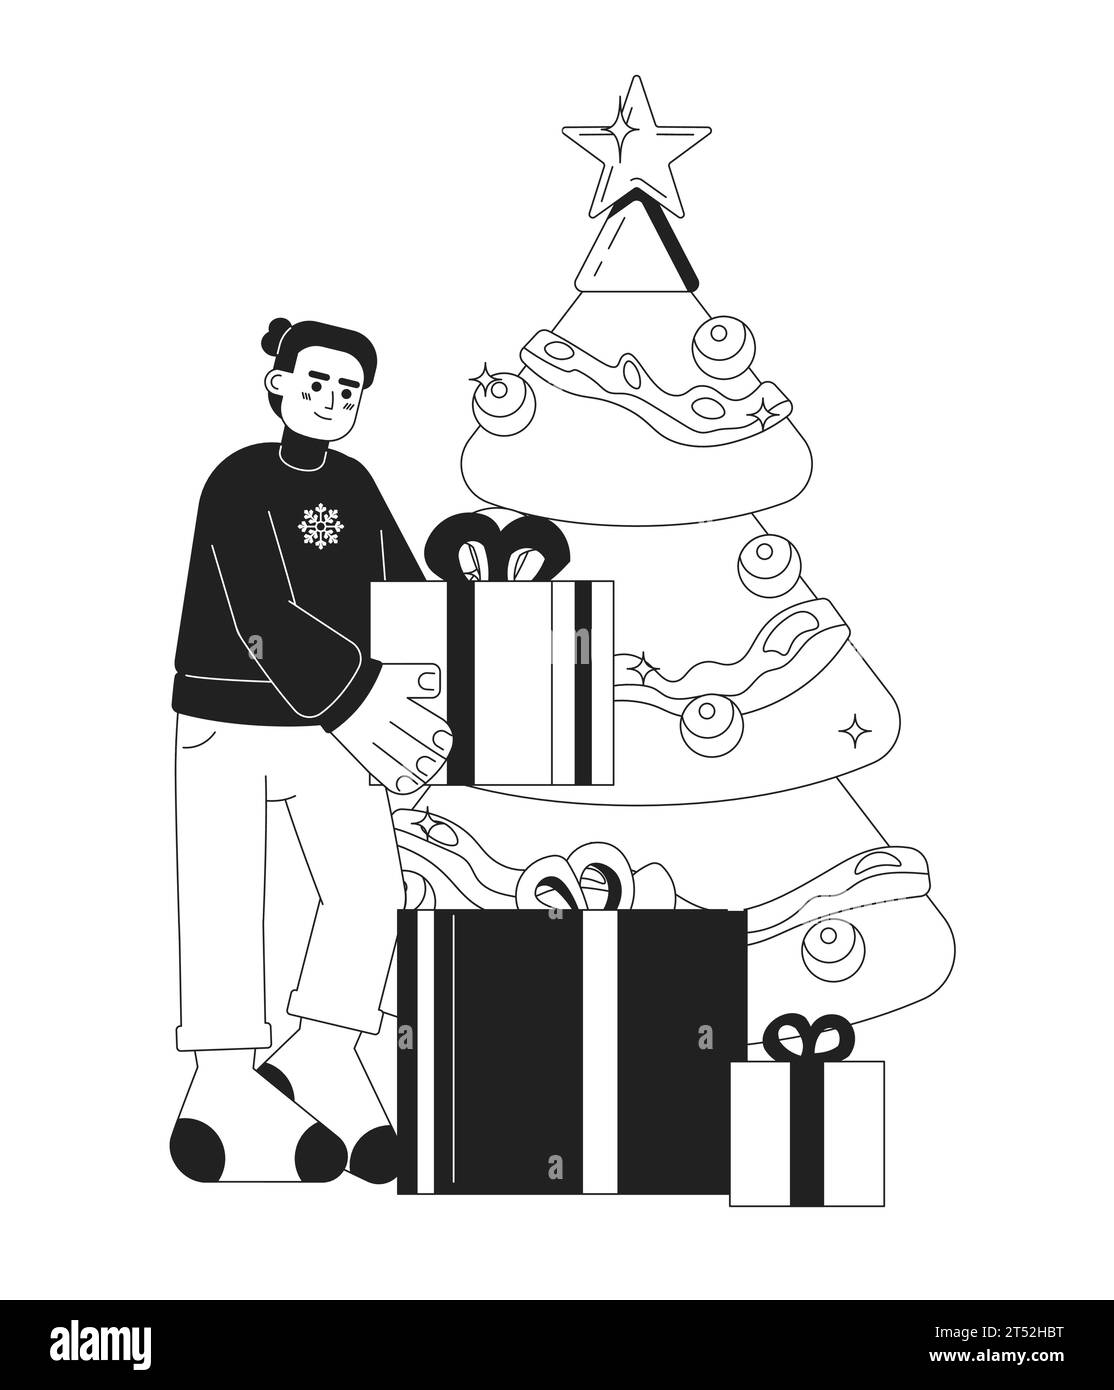 Hispanic man stacking gifts under Xmas tree black and white 2D cartoon character Stock Vector